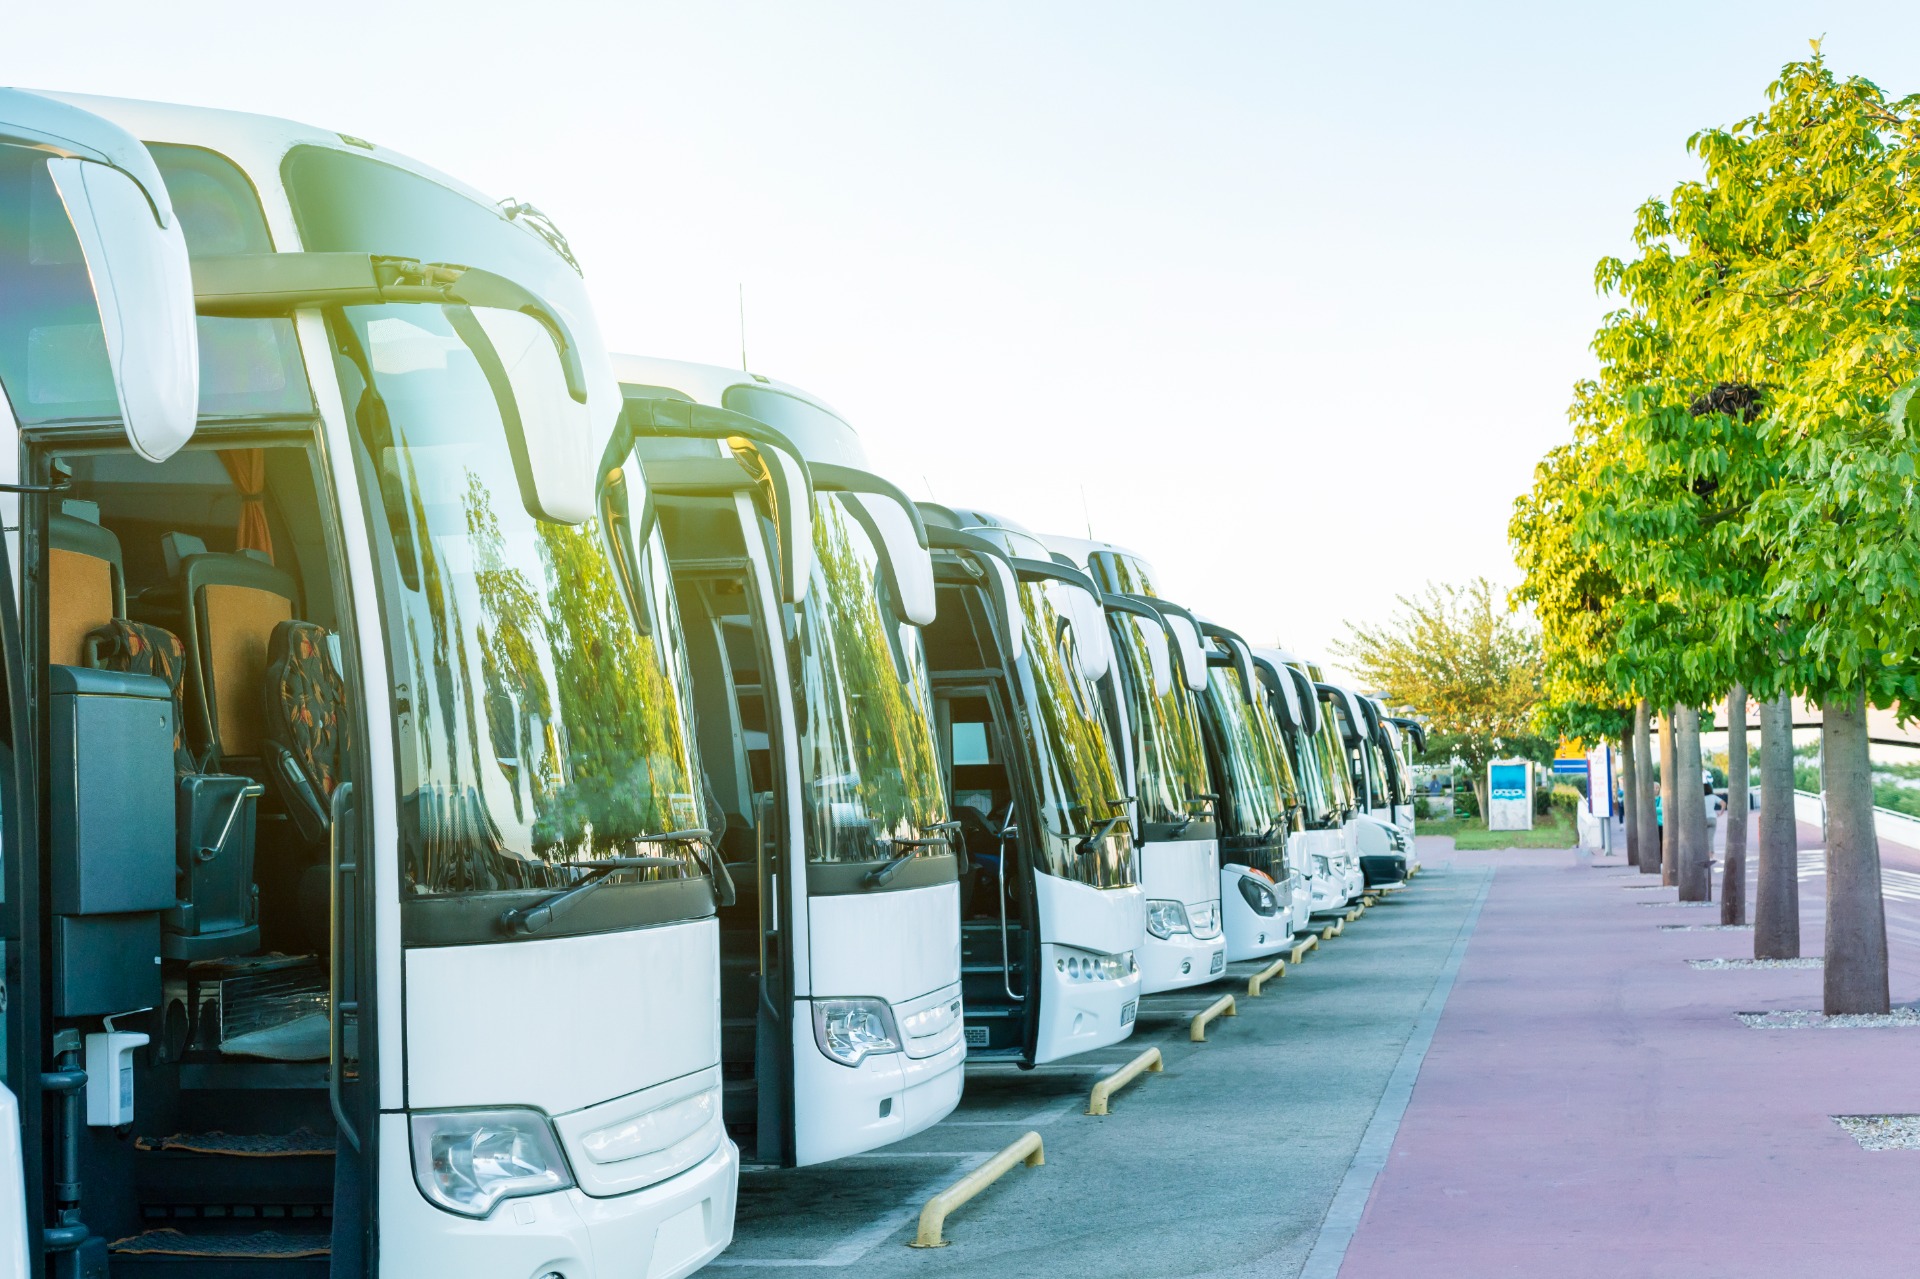 tourist-buses-bus-station-travel-transport-tourism-road-trip-concept